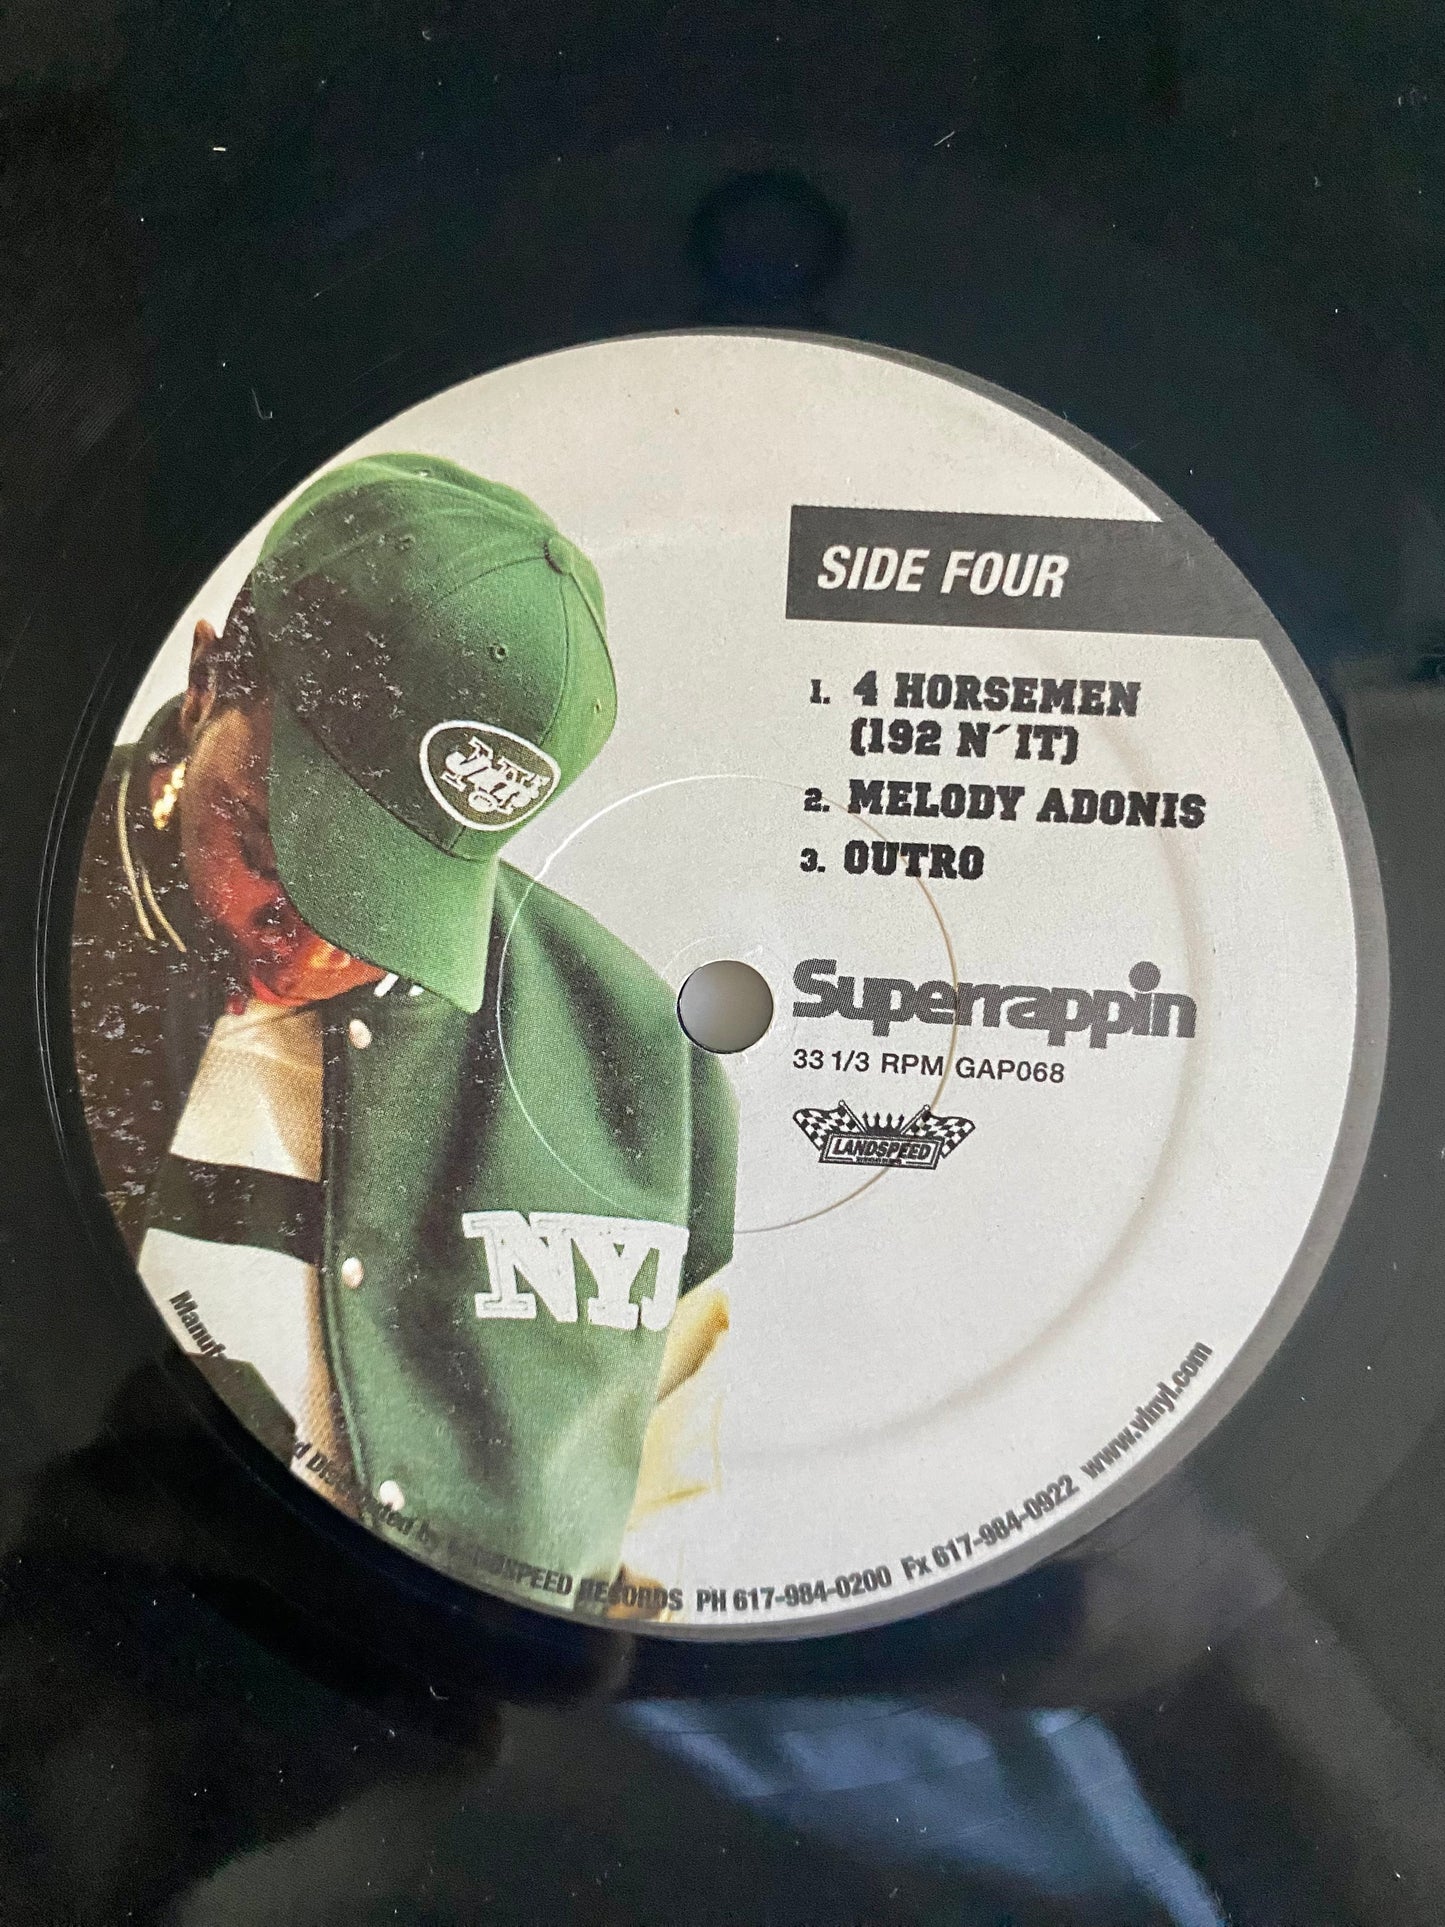 Phife Dawg - Ventilation: Da LP (2xLP, Album). HIP-HOP